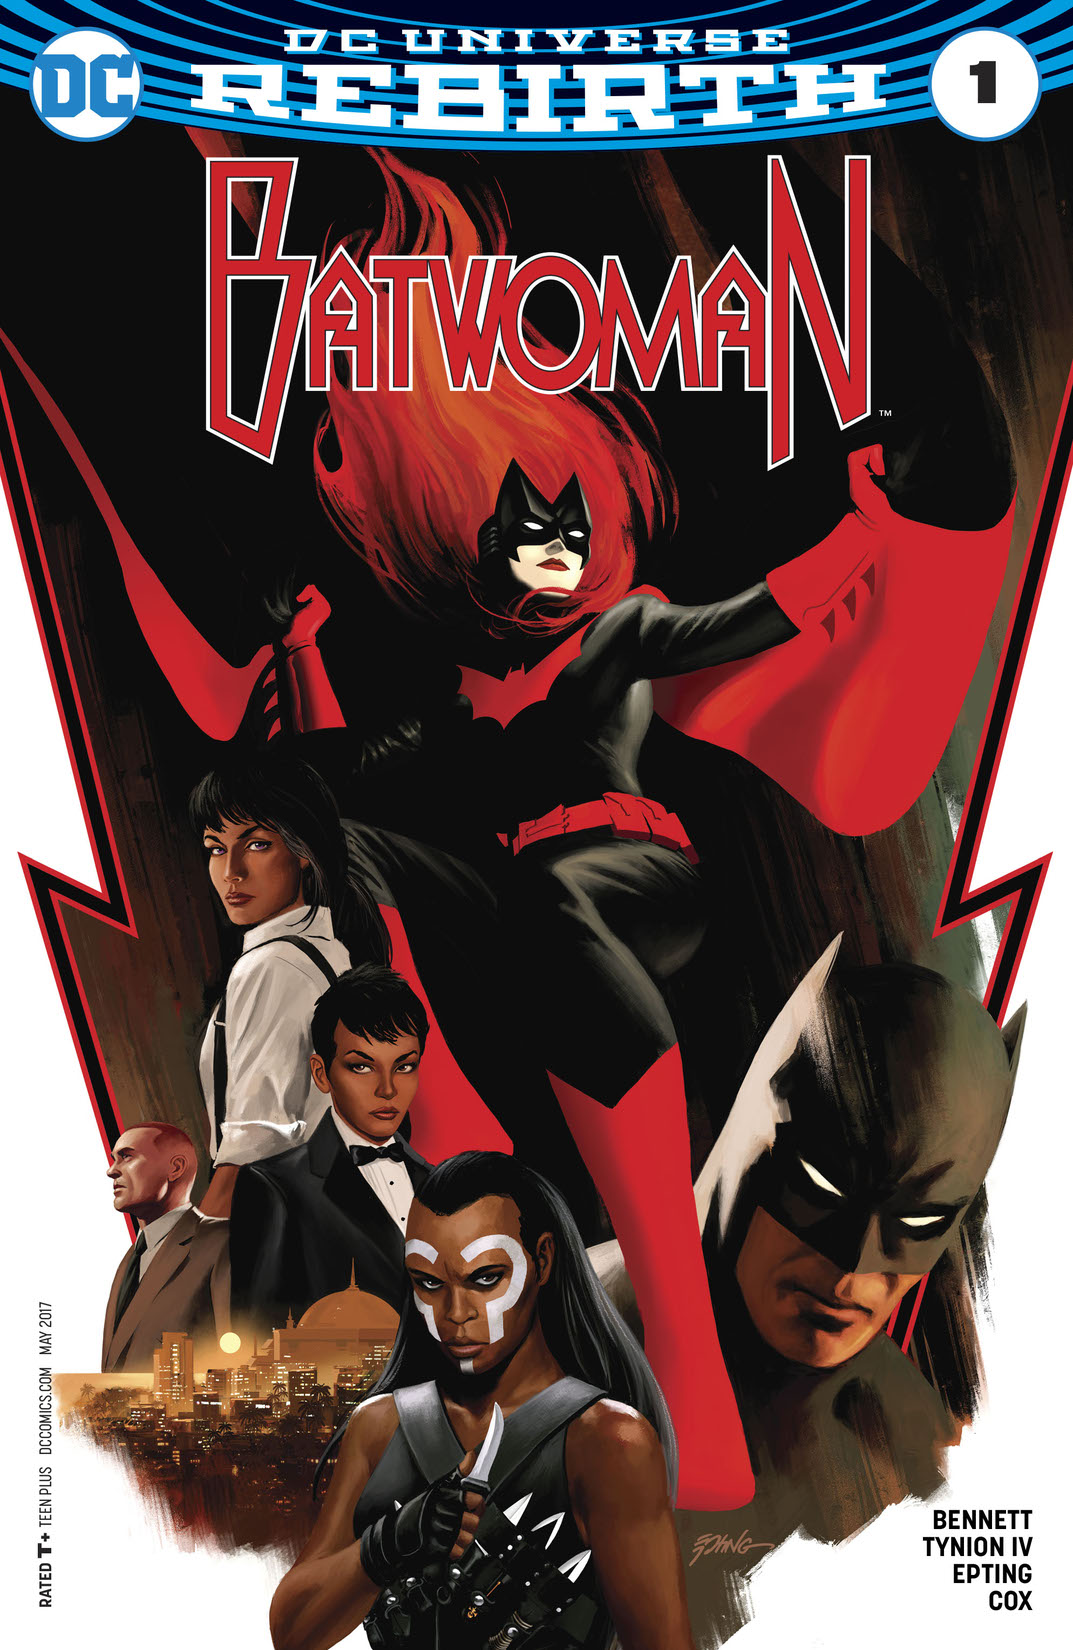 Batwoman (2017-) #1 preview images